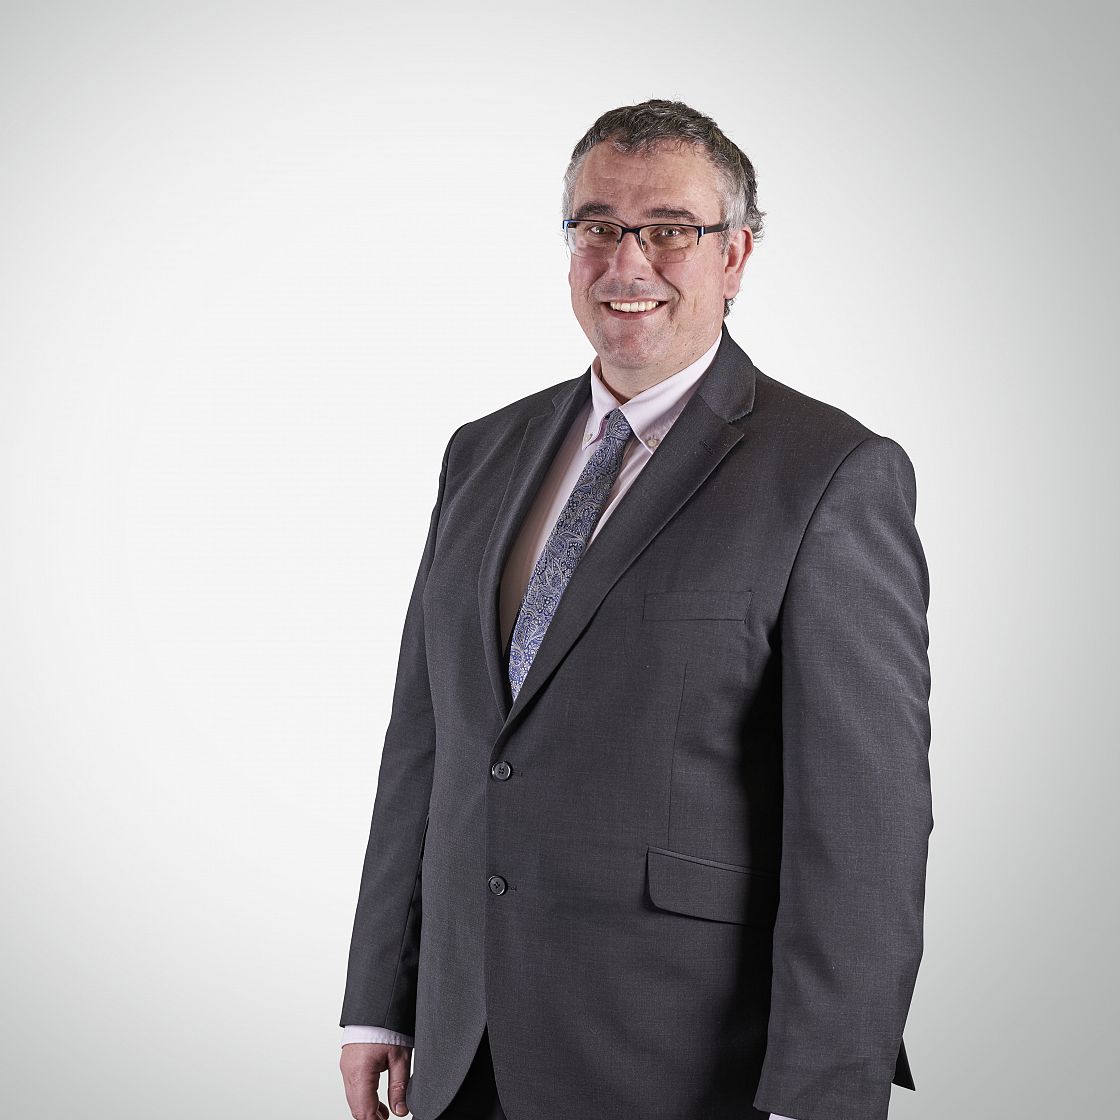 Iain Butler R&D Tax Credits Director at Buzzacott